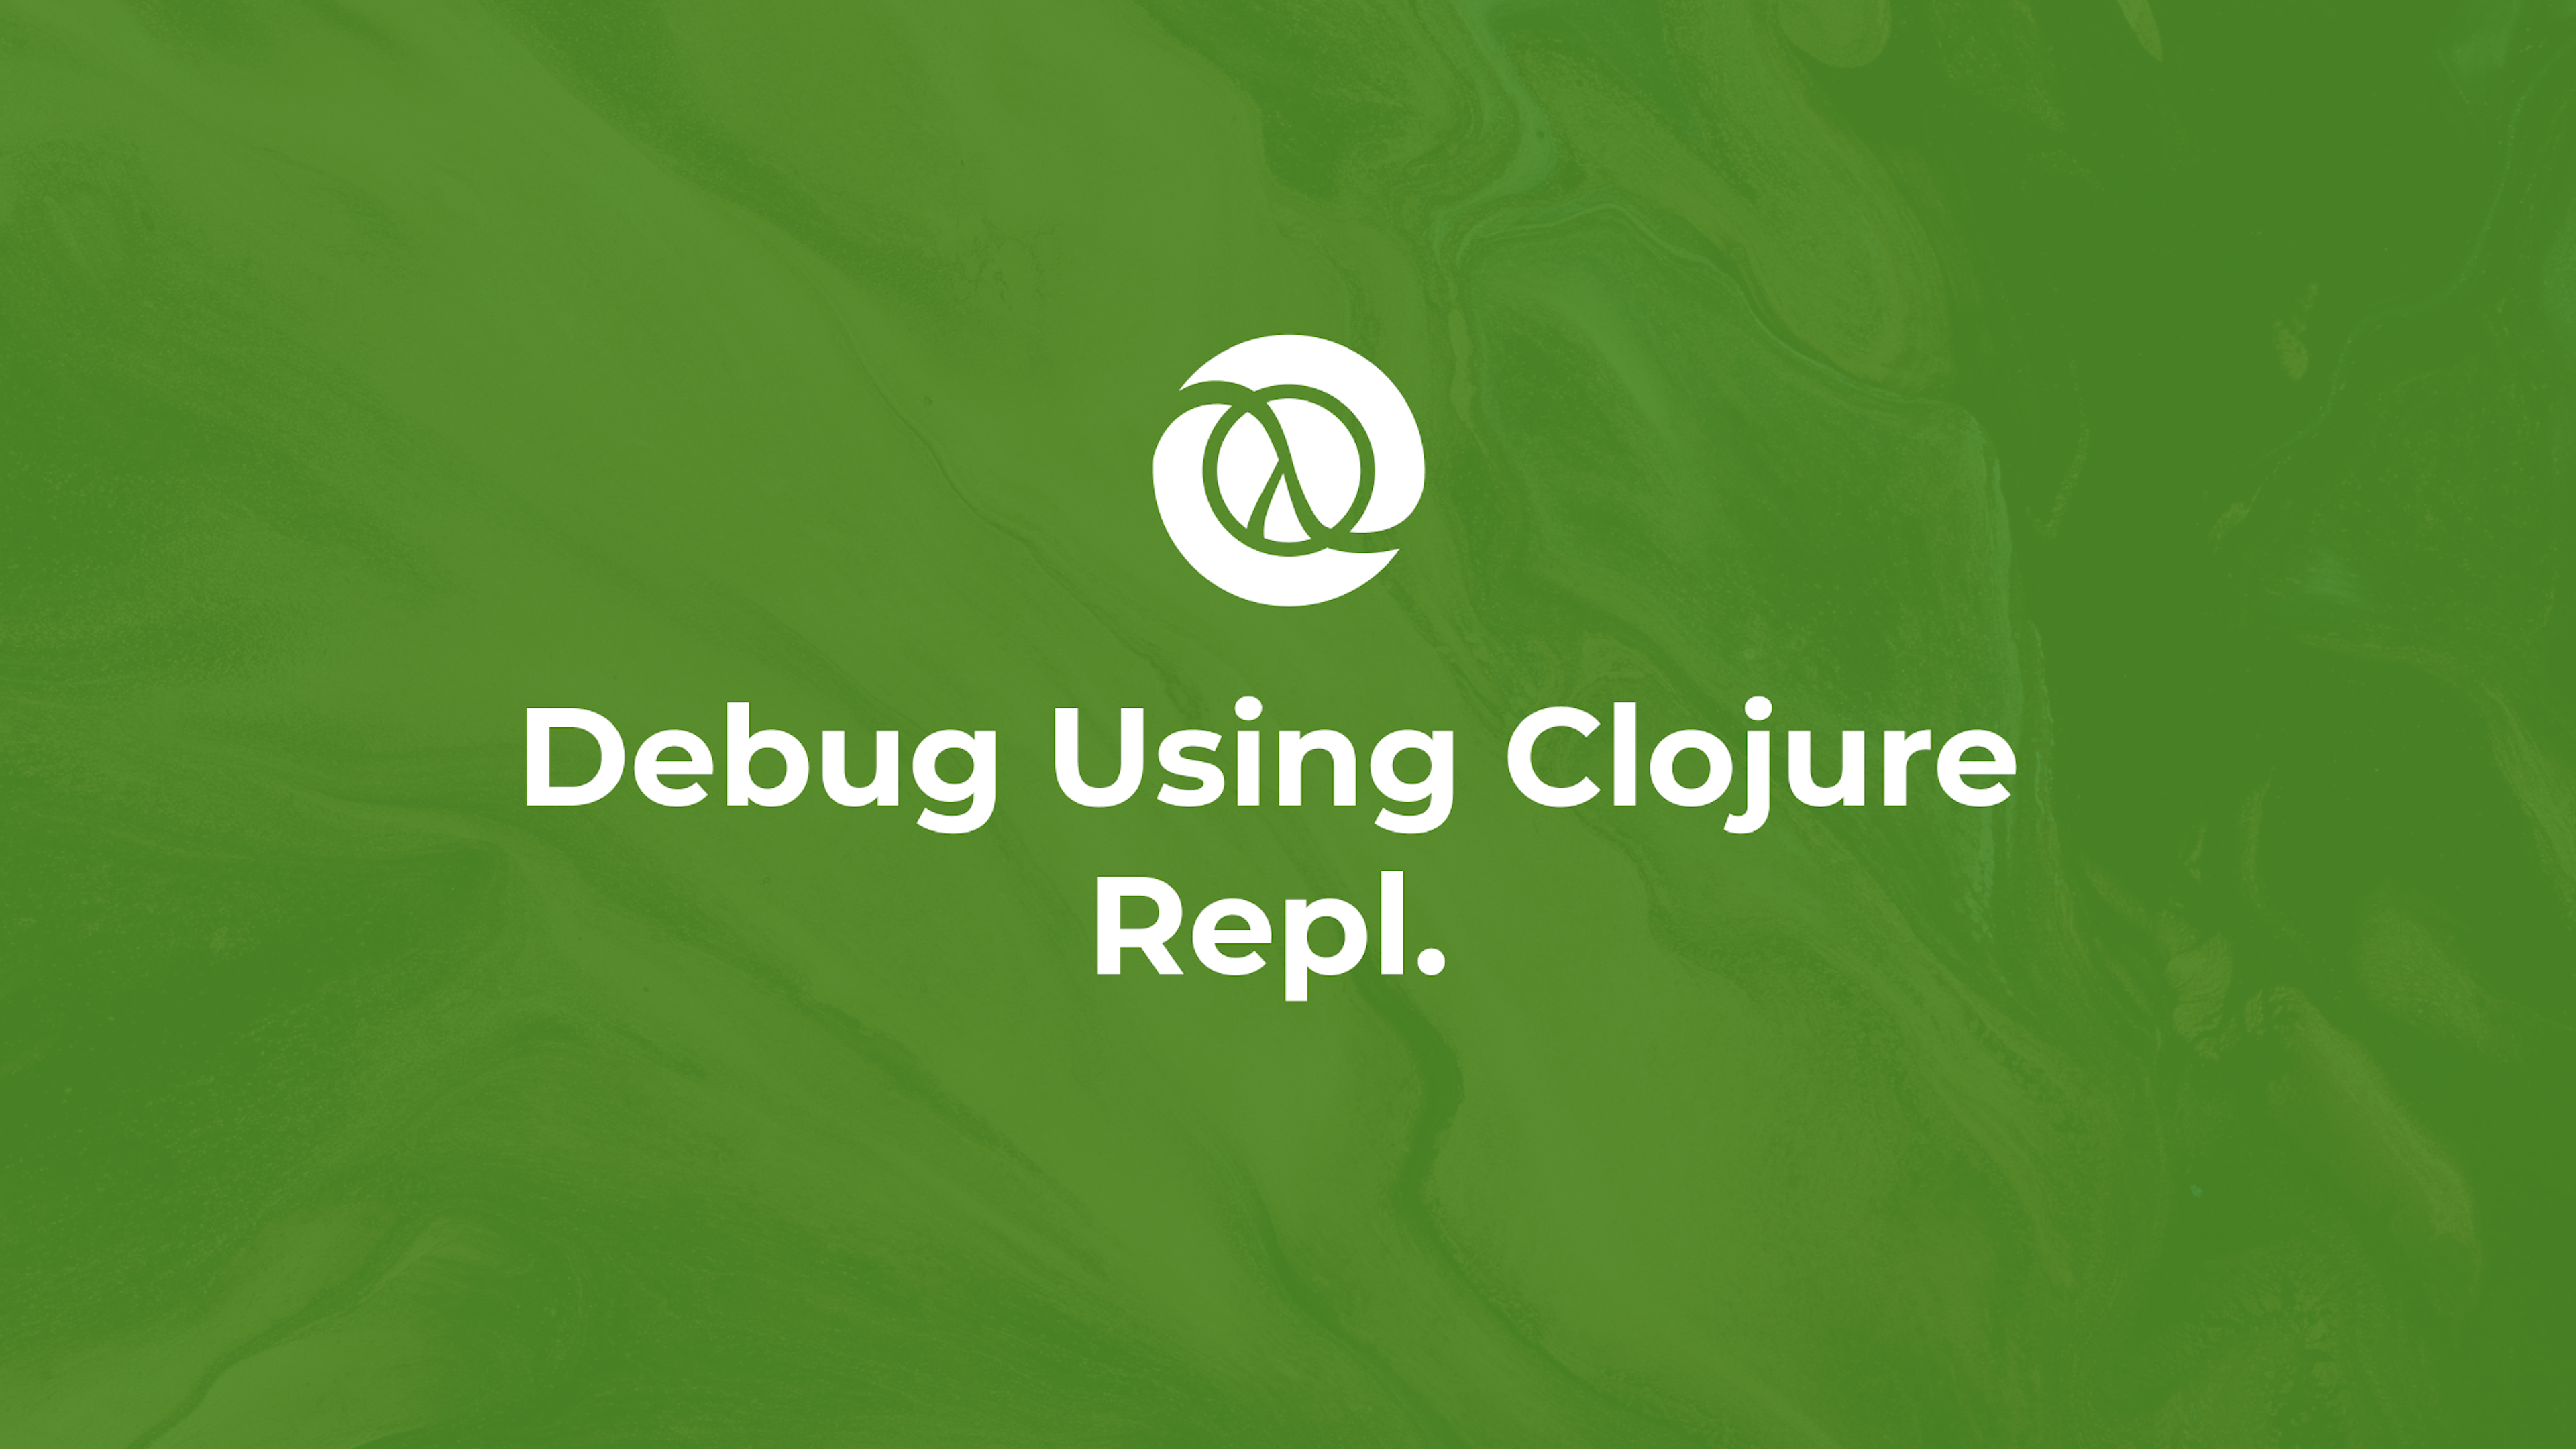 Debug Using Clojure Repl.